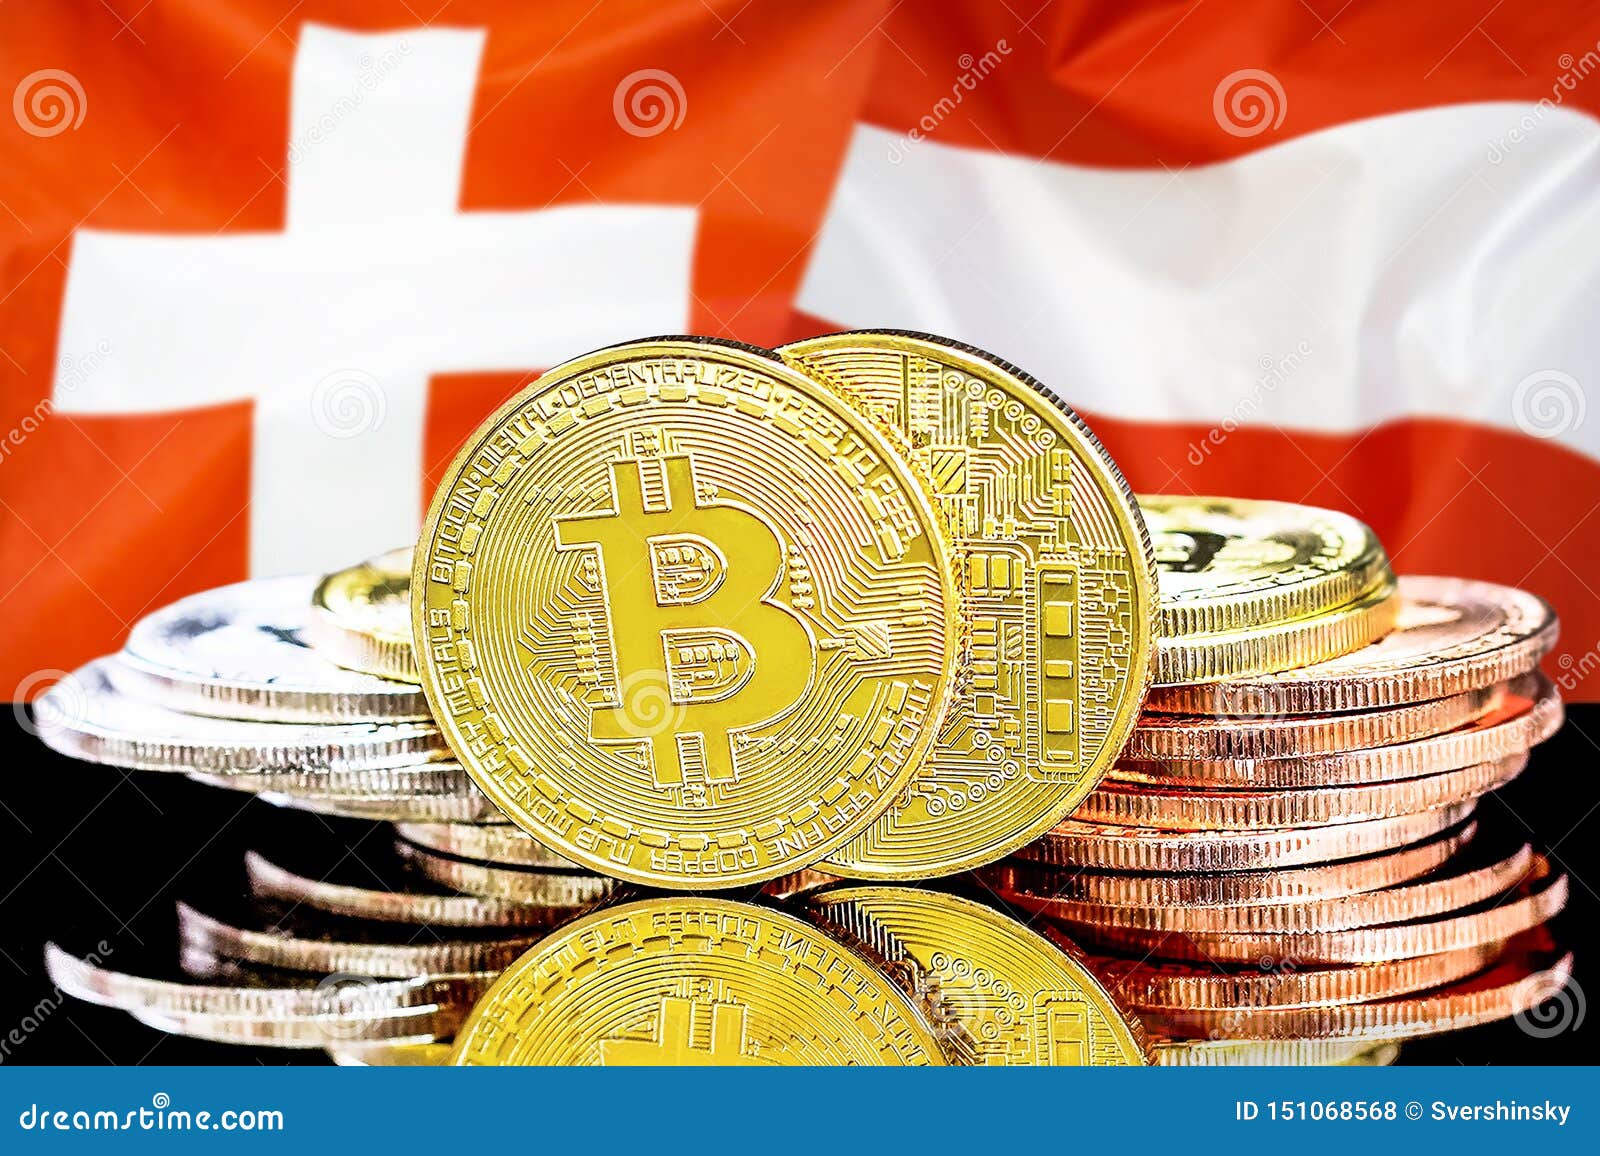 bitcoin buy sell austria